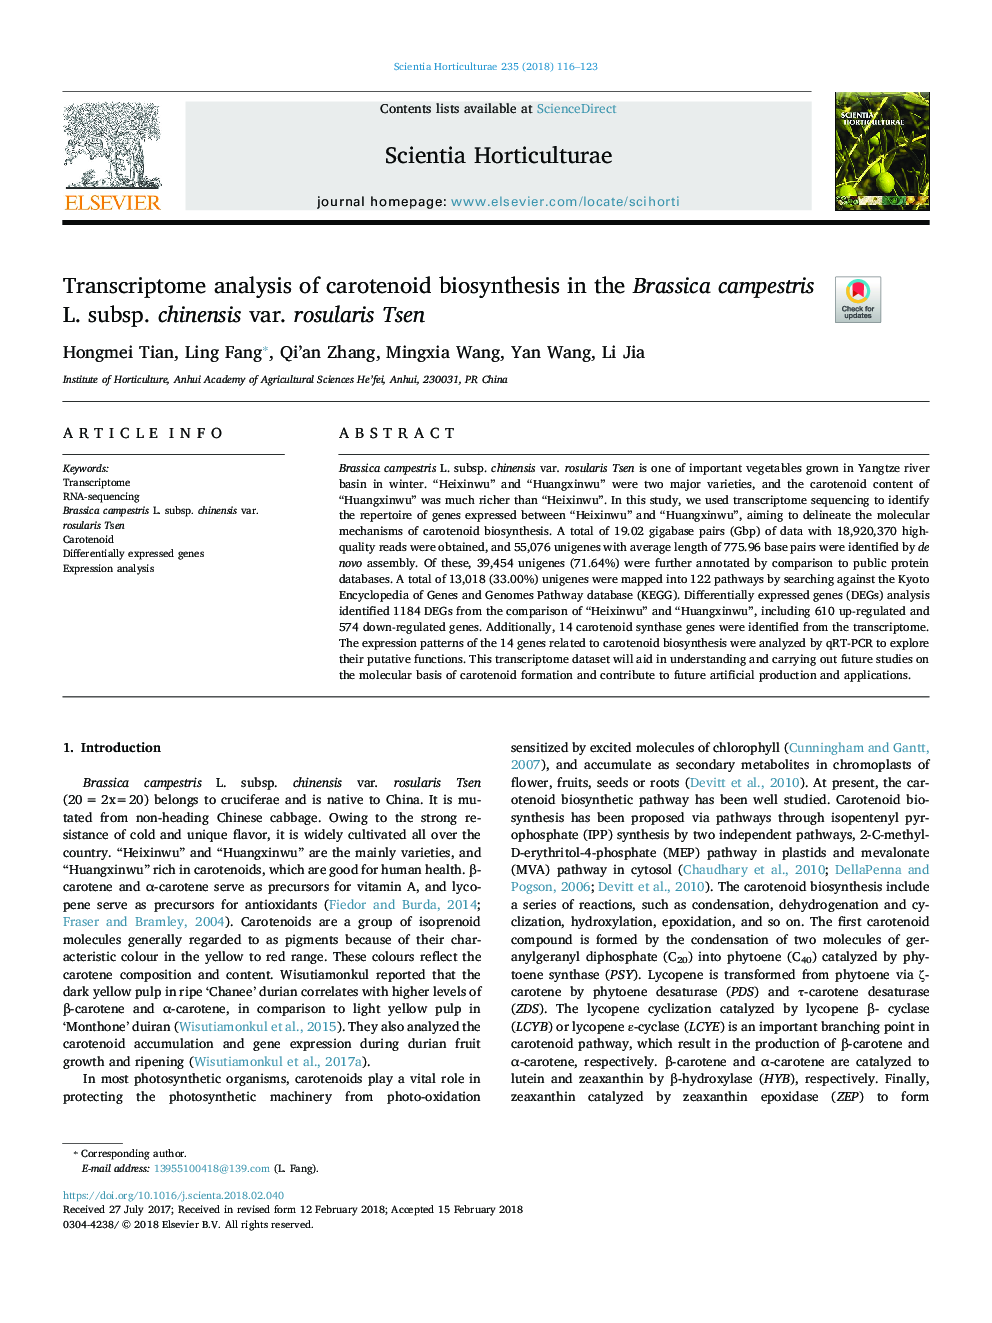 Transcriptome analysis of carotenoid biosynthesis in the Brassica campestris L. subsp. chinensis var. rosularis Tsen